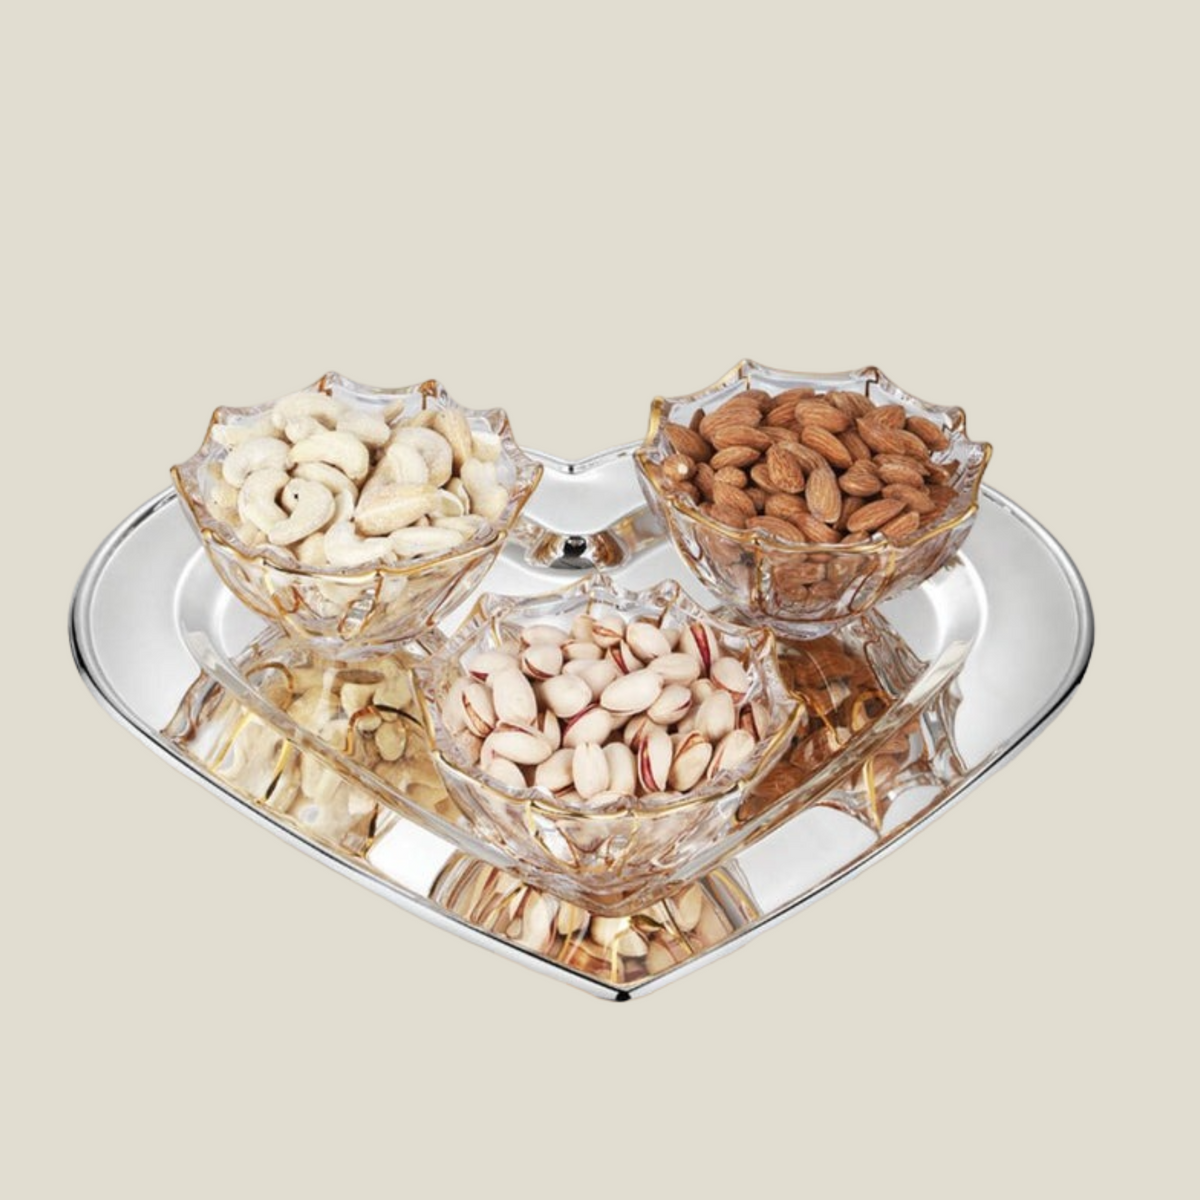 Heart tray with three glass bowl